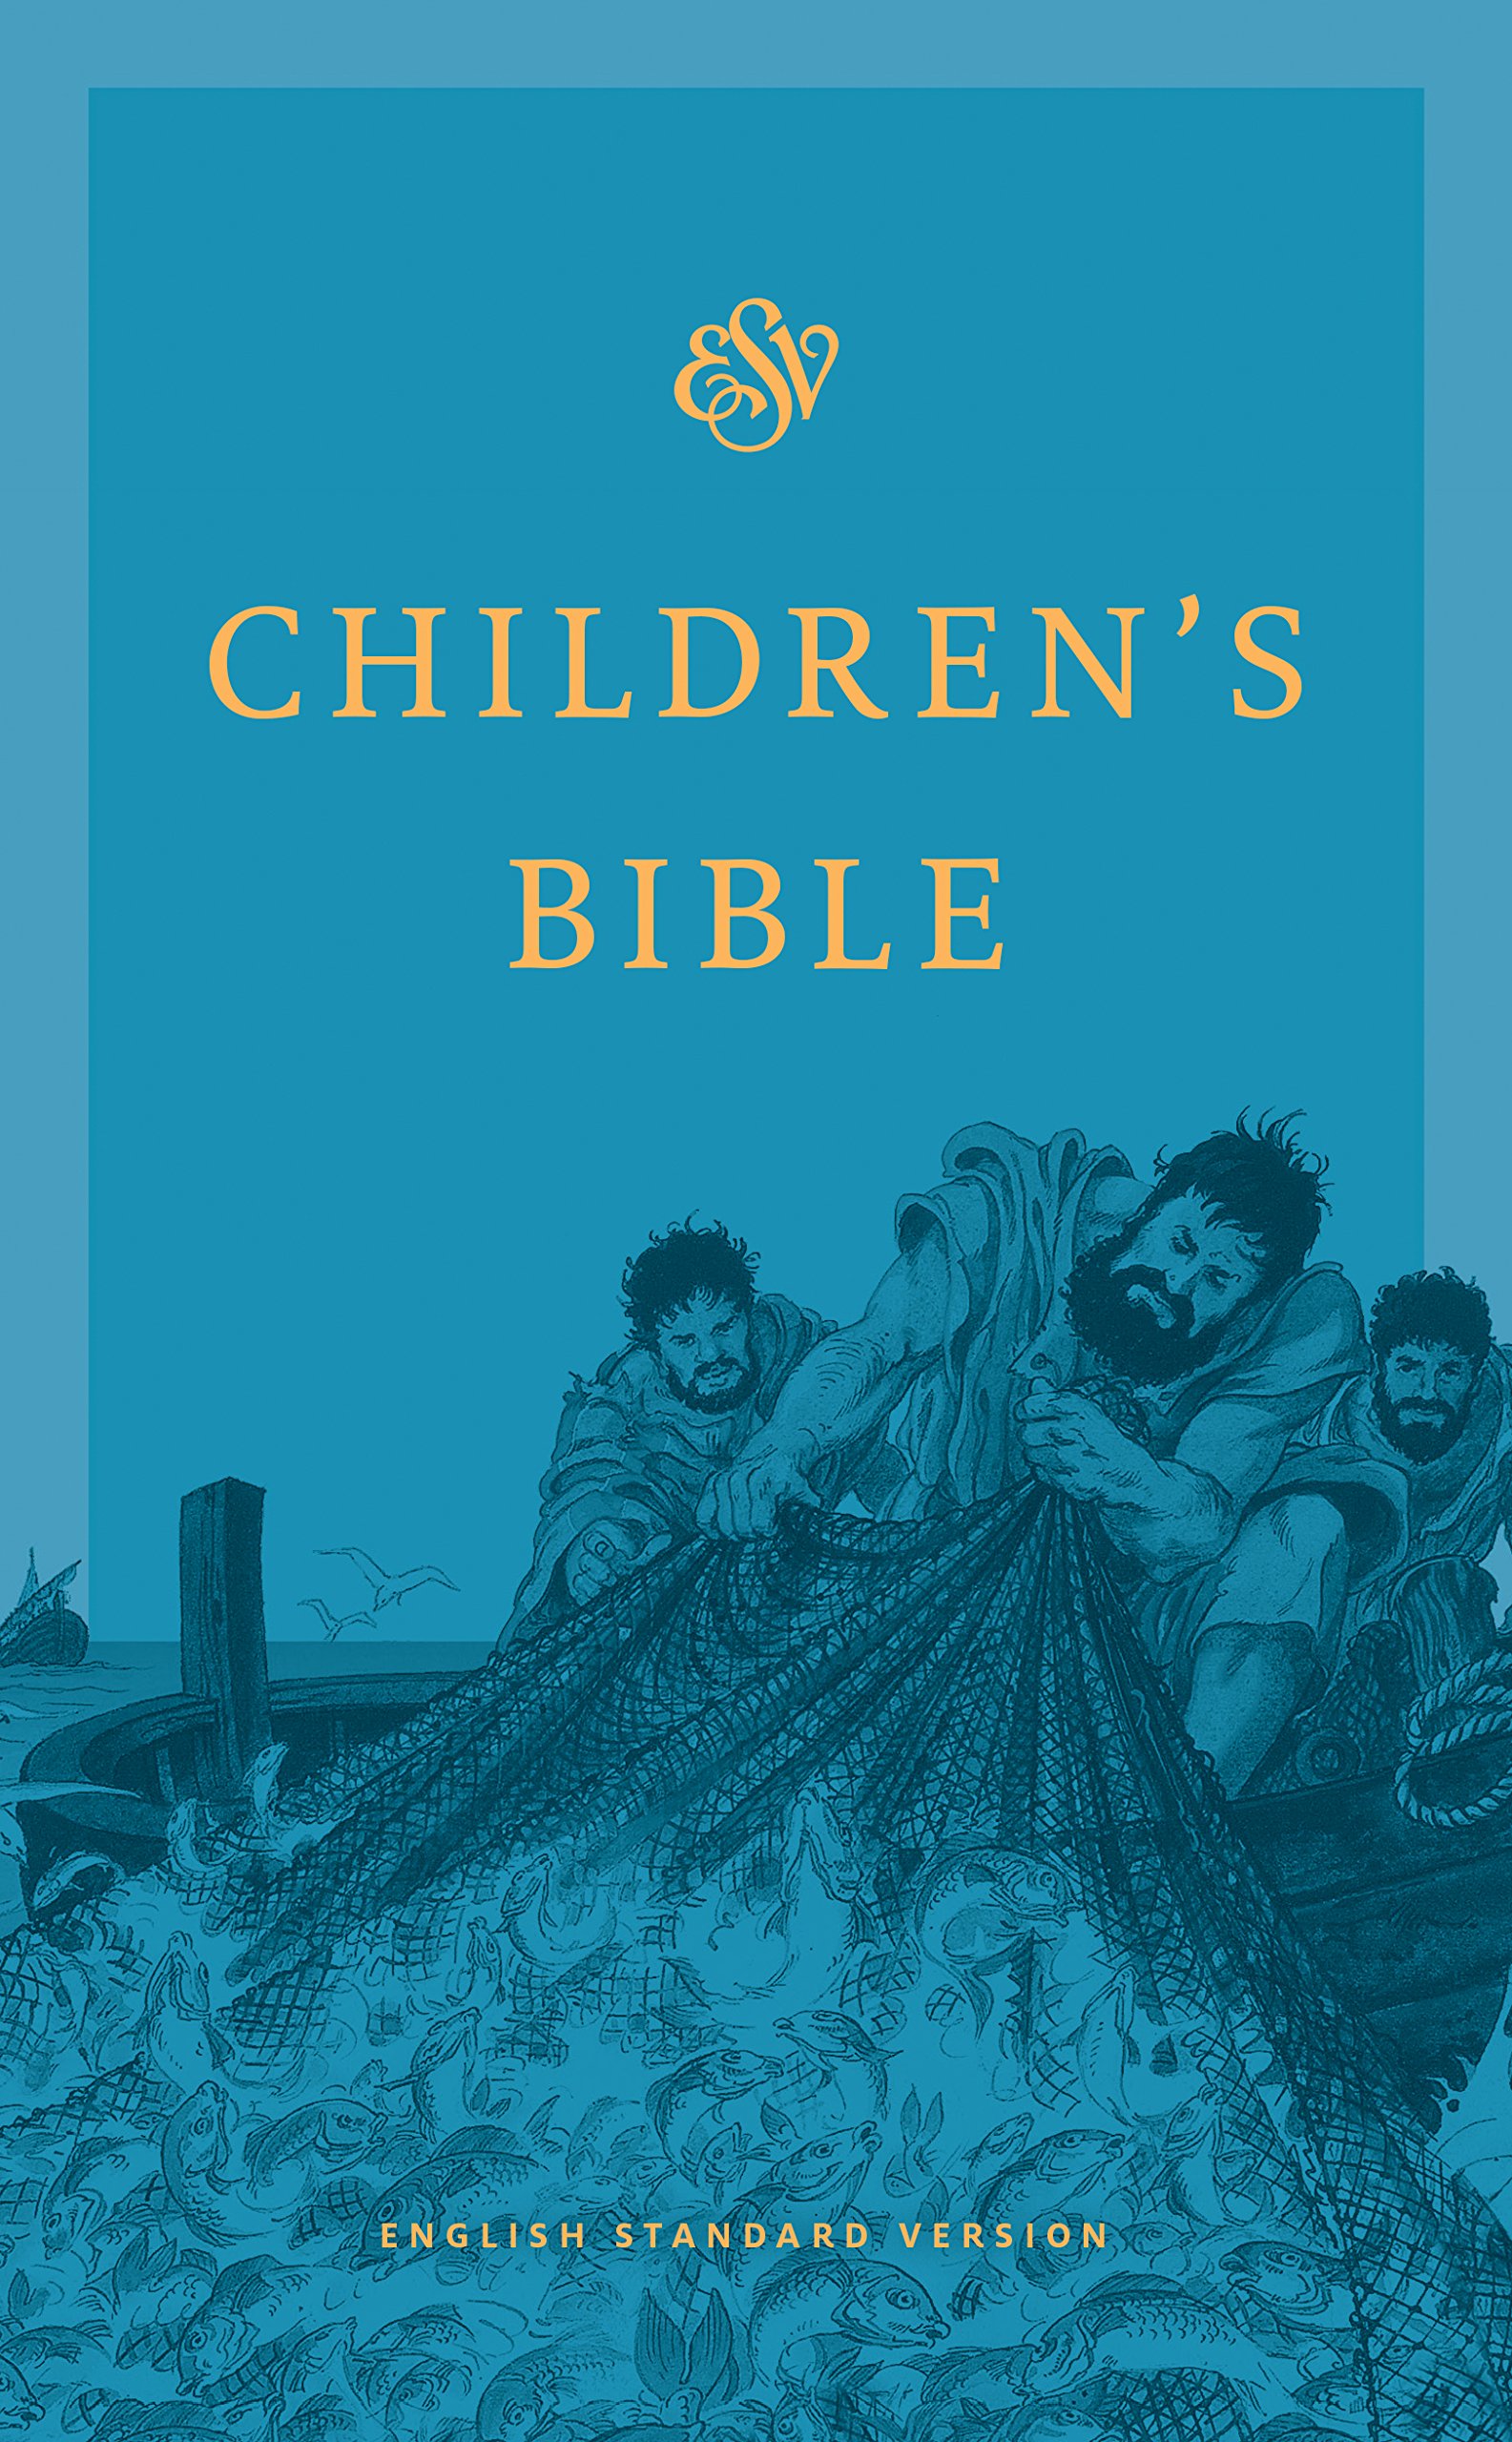 Book Notice: ESV CHILDREN’S BIBLE